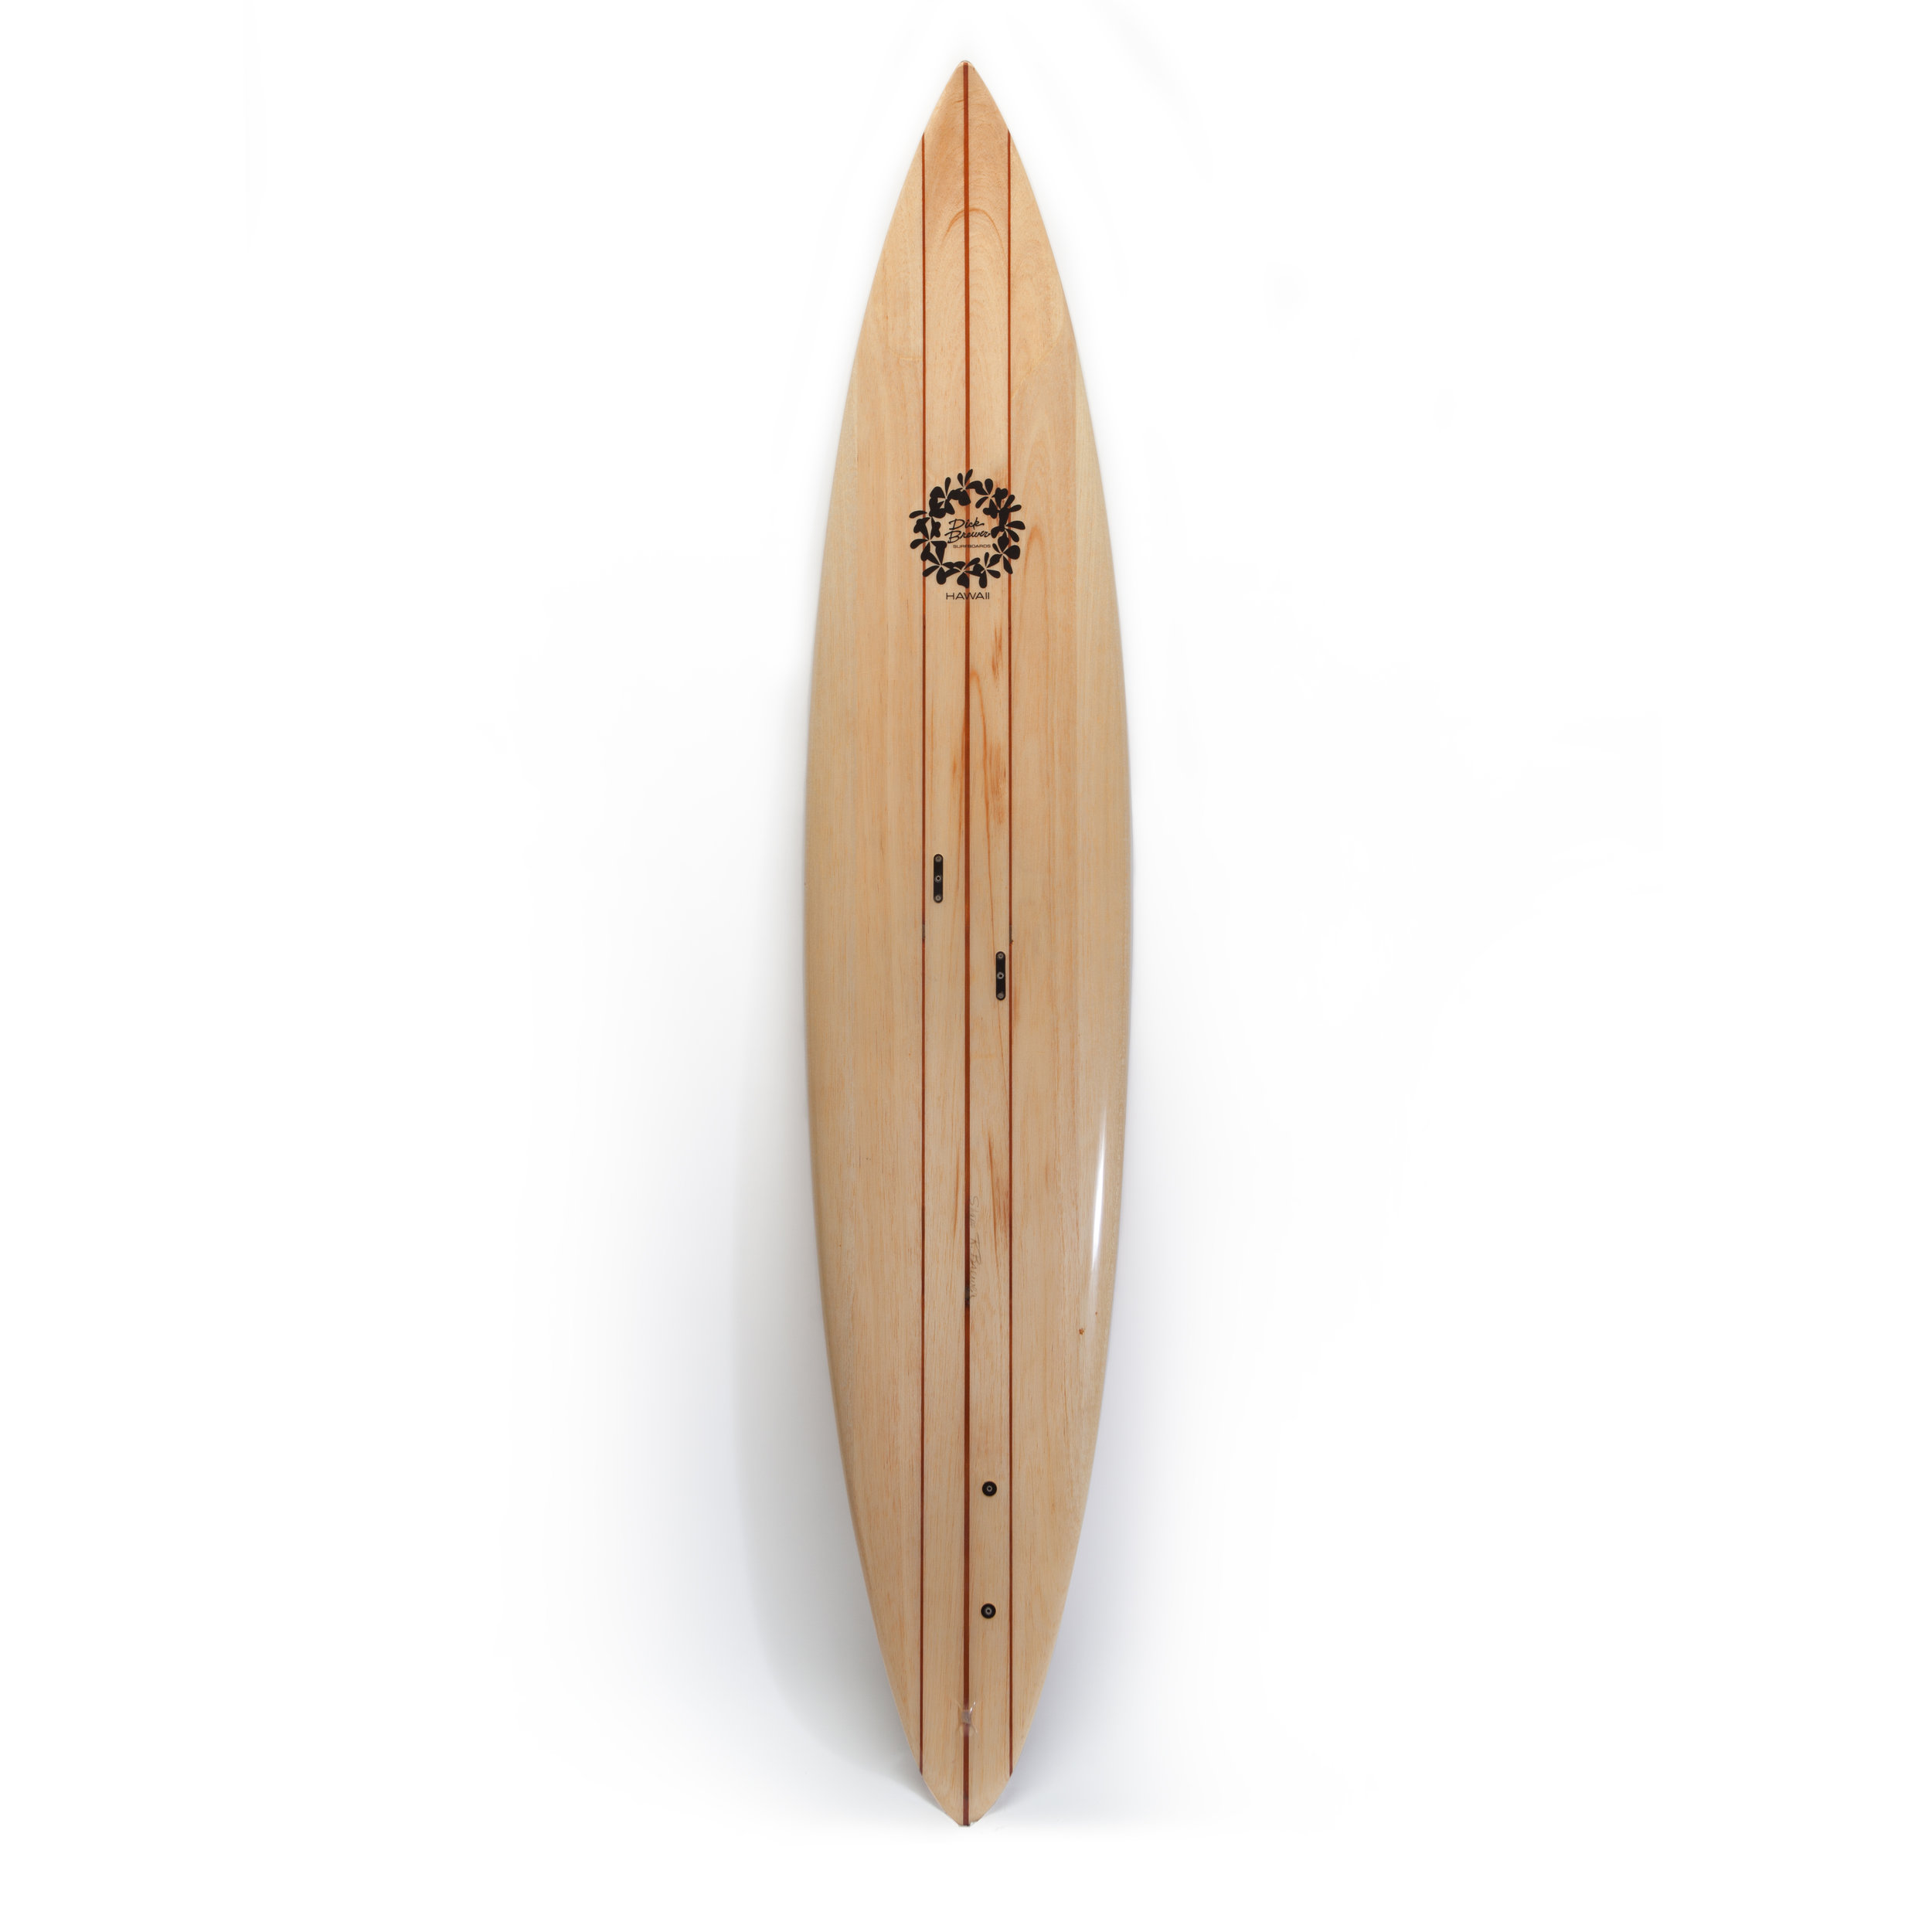 Shop Surfboards | Dick Brewer Surfboards